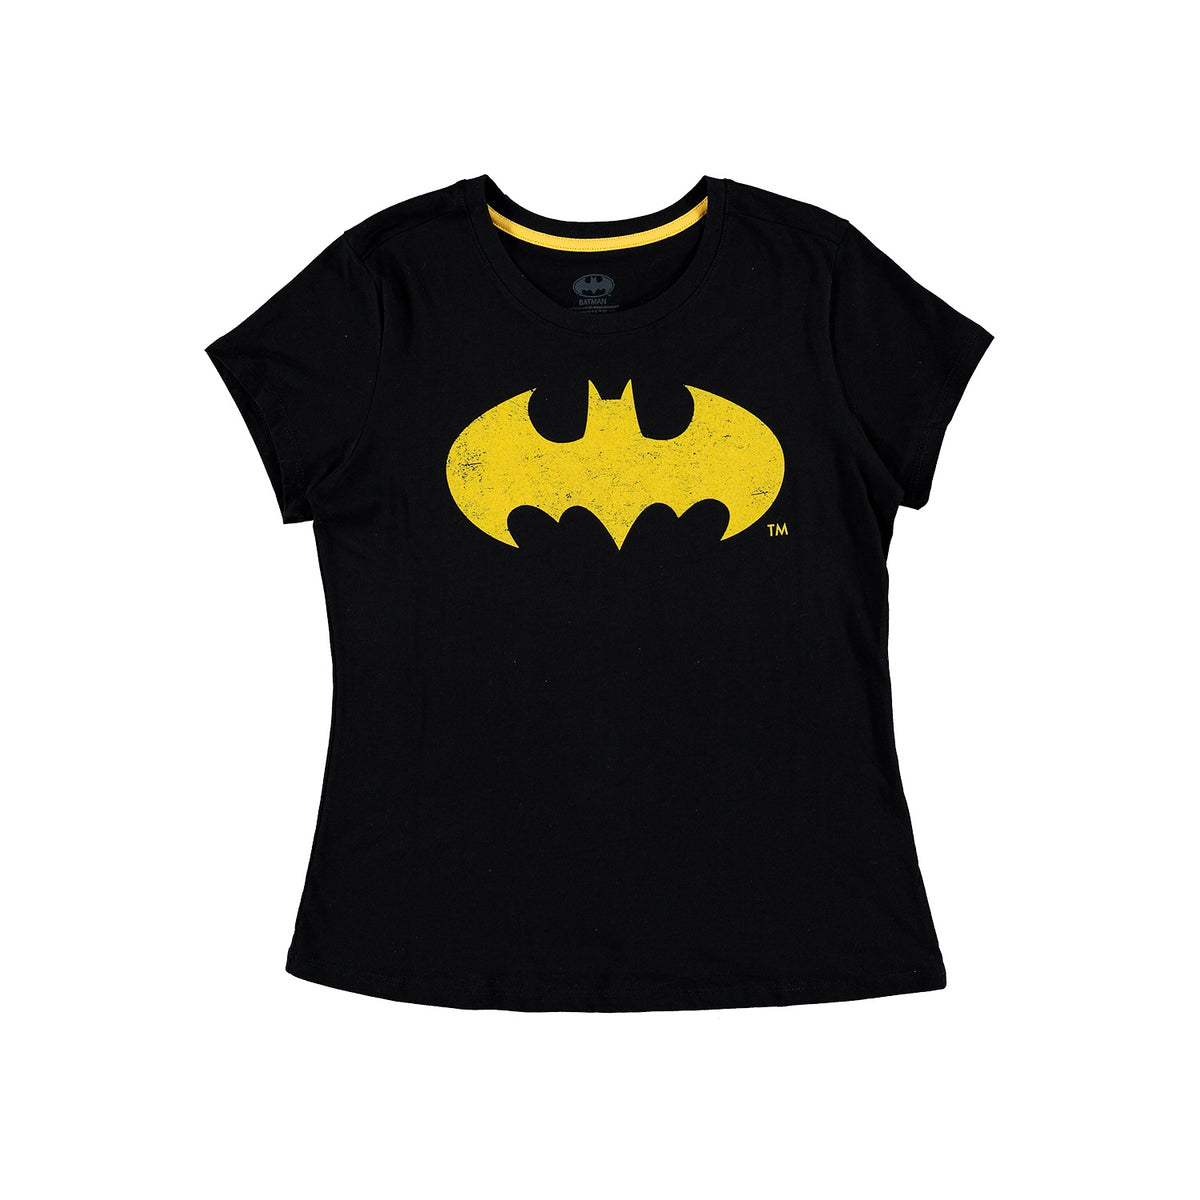 Camiseta de Batman Super Store